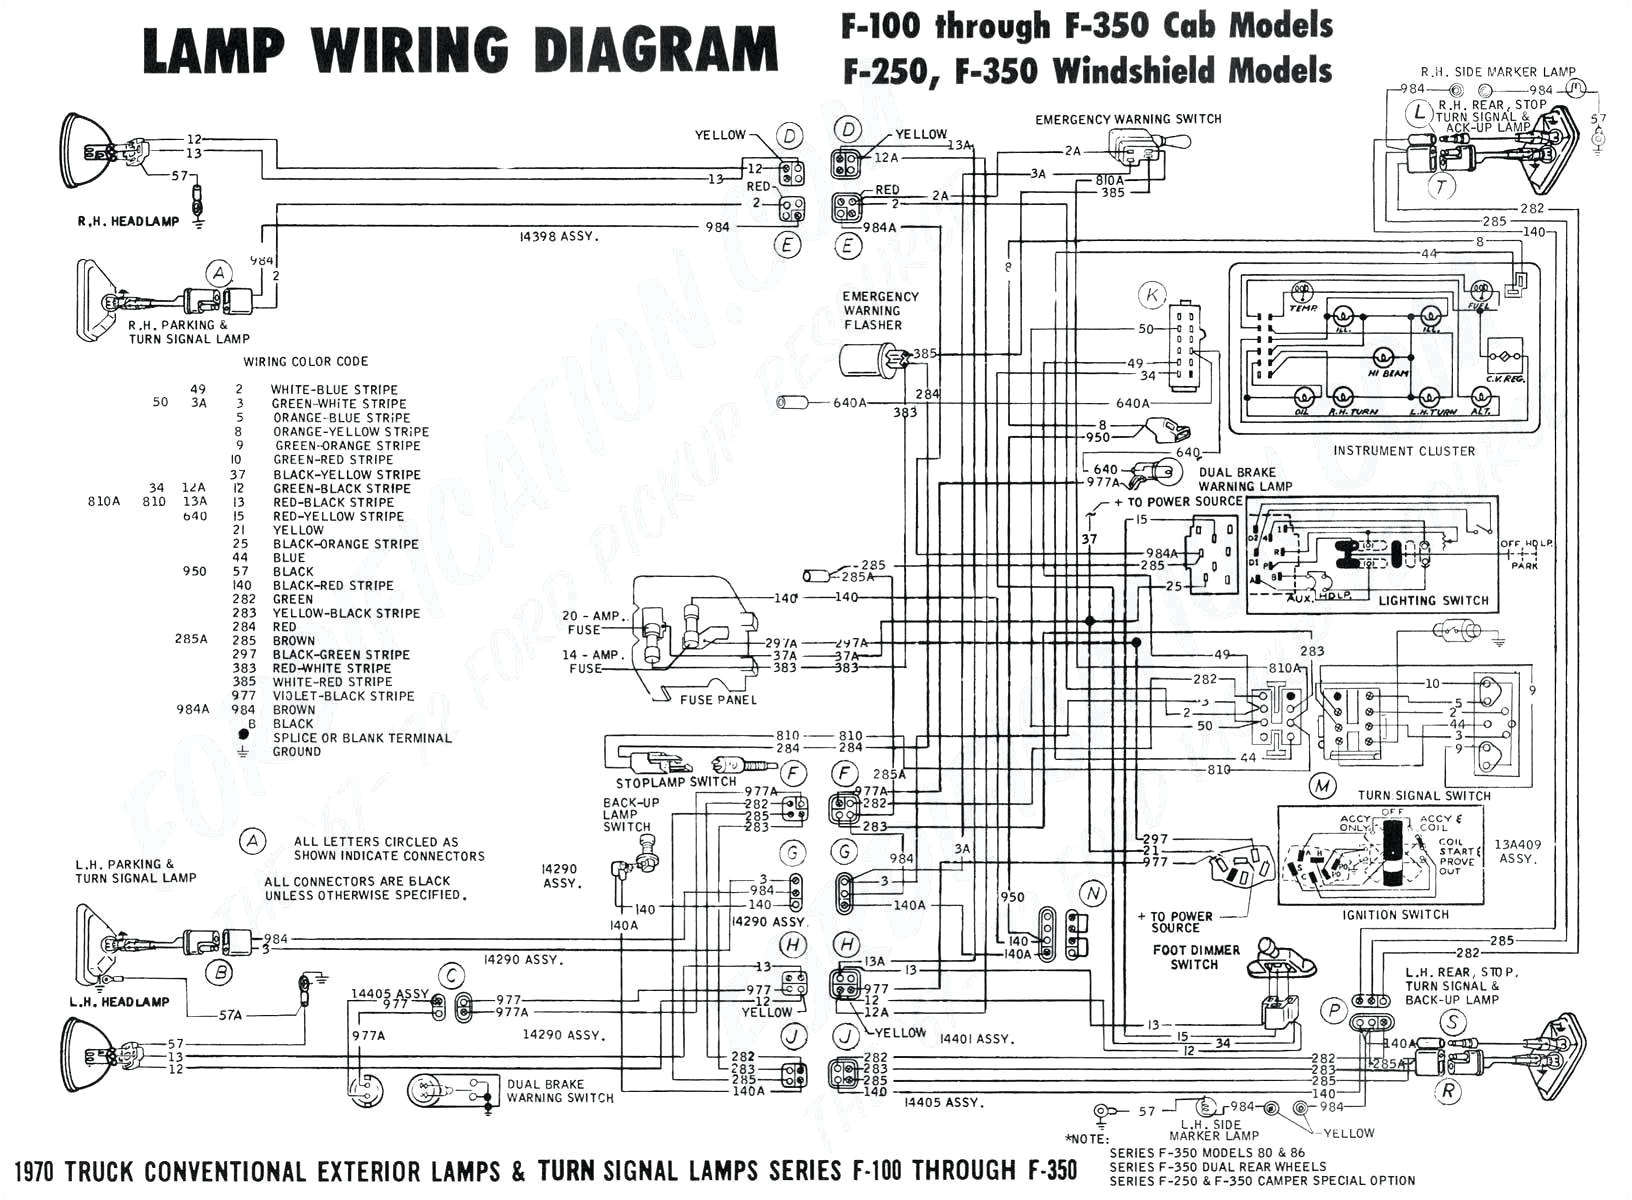 lenco trim tabs wiring diagram best of omc trim switch wiringlenco trim tabs wiring diagram best